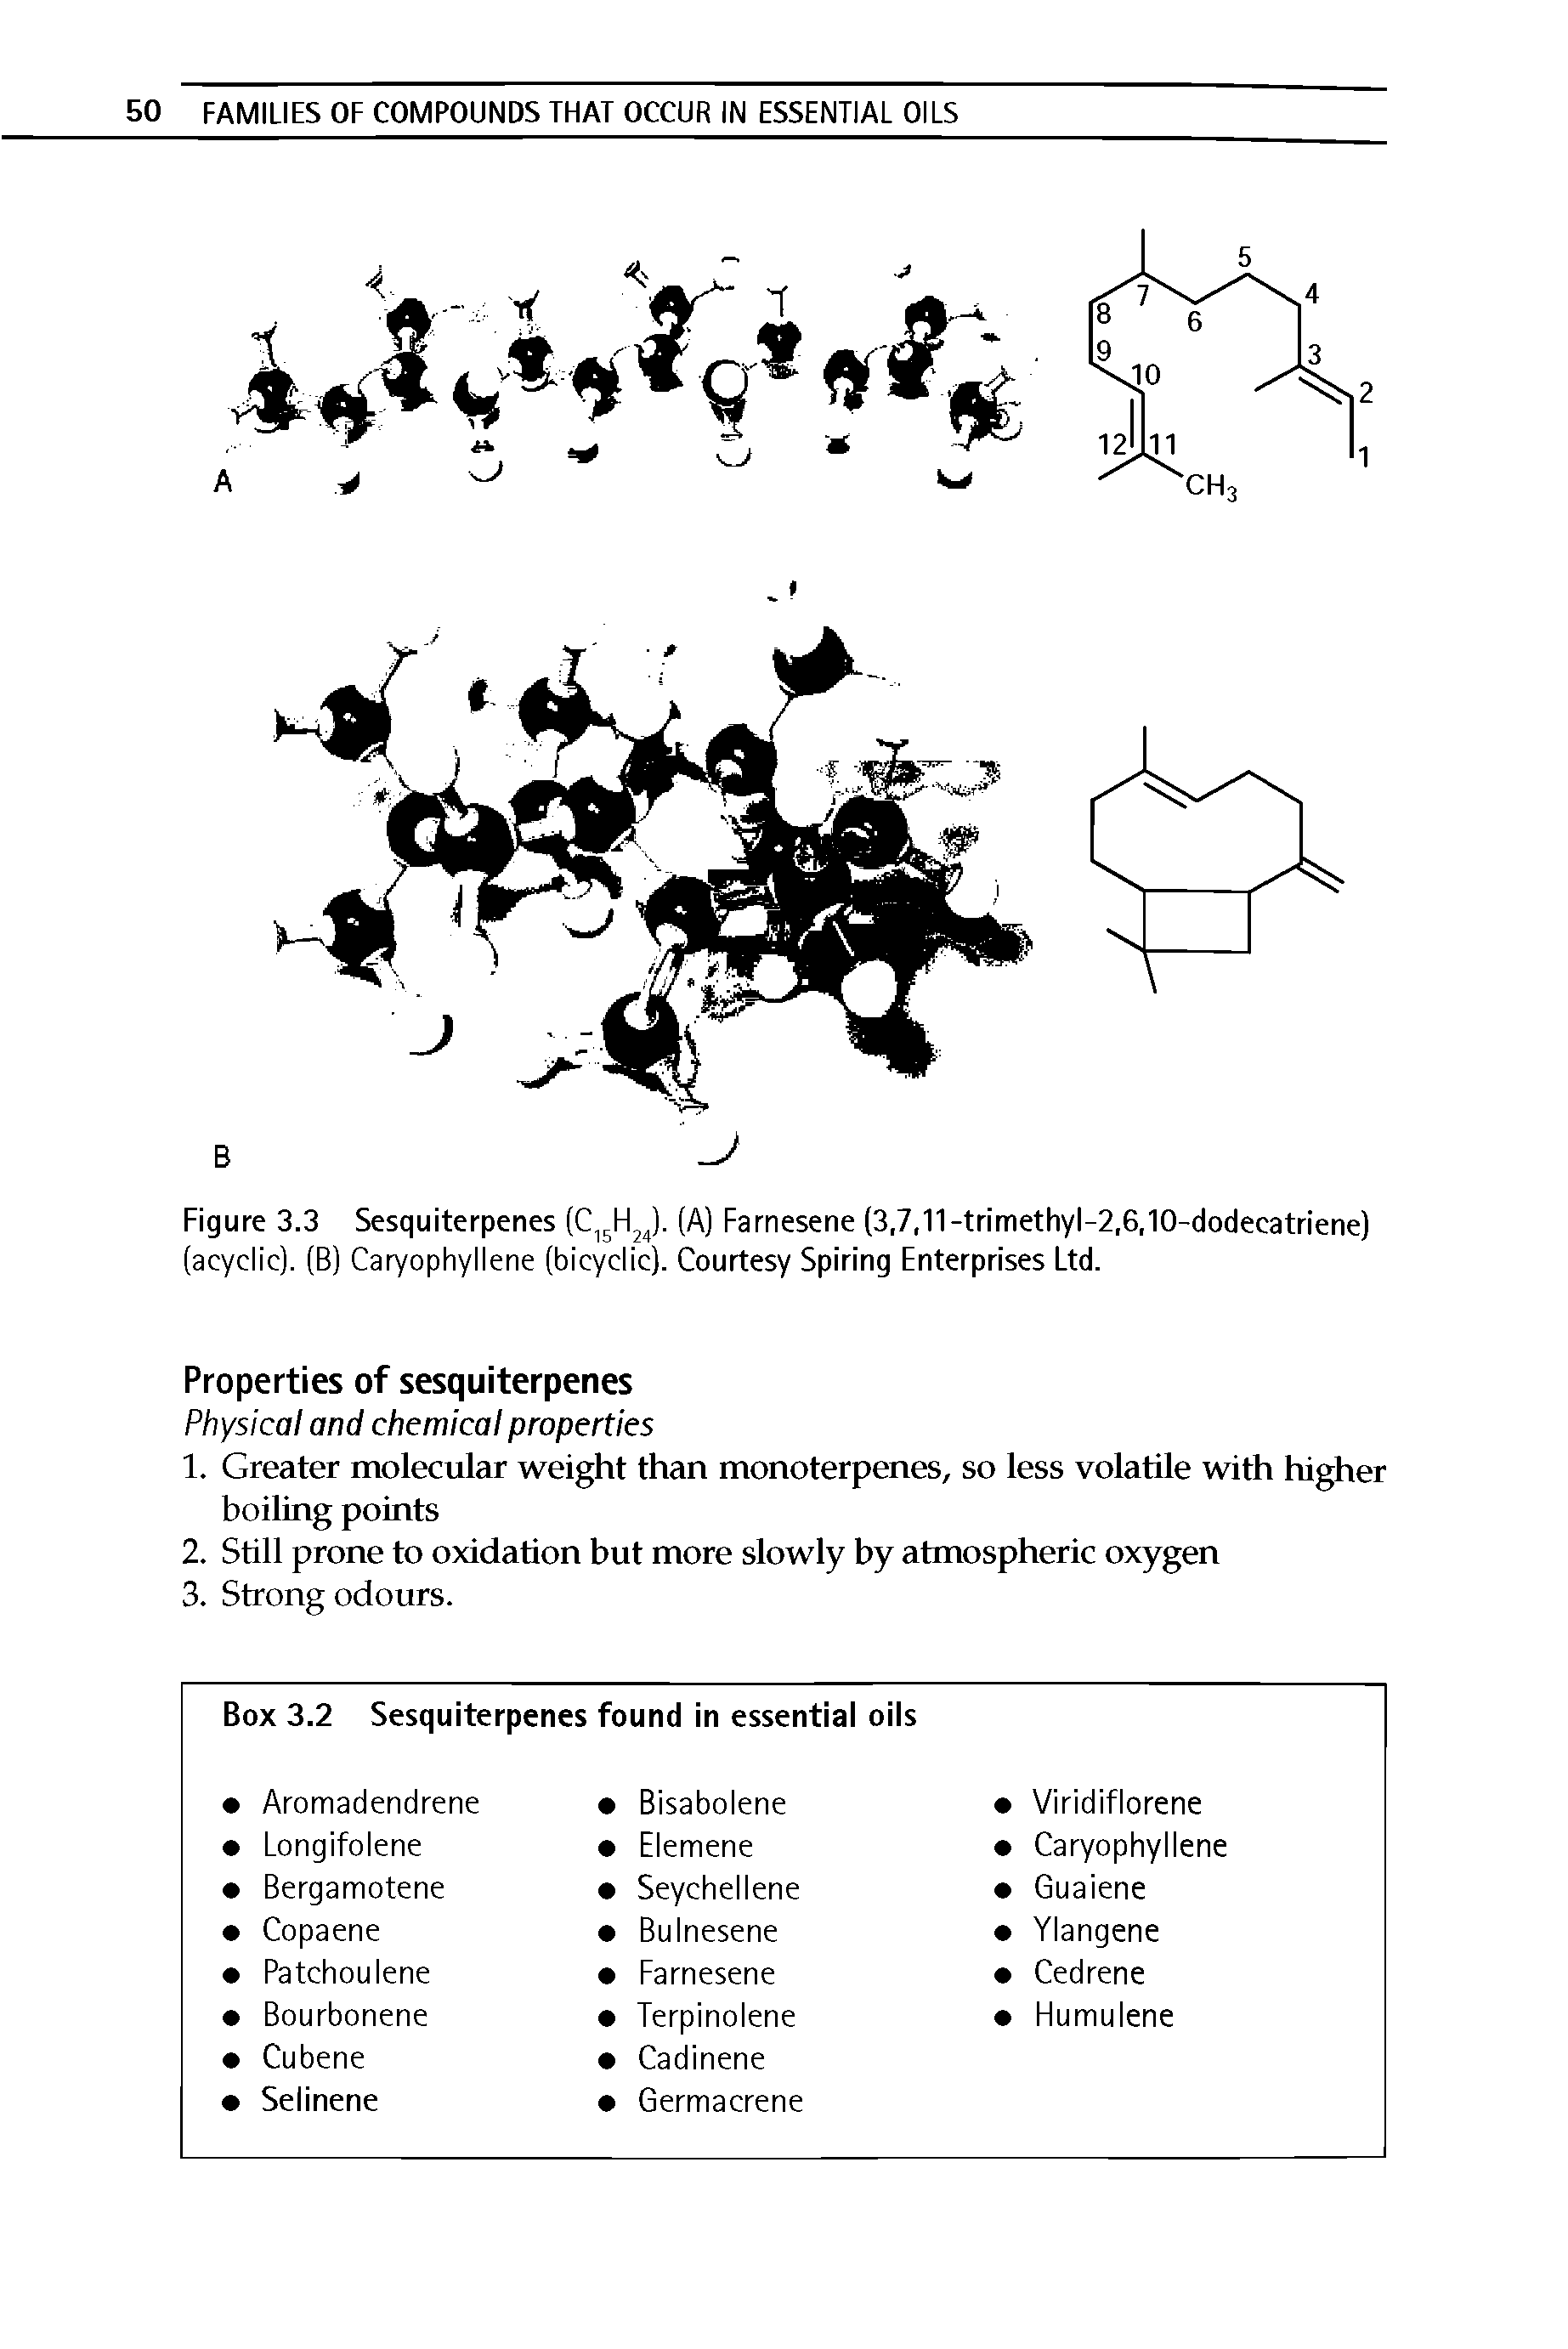 Figure 3.3 Sesquiterpenes (C15H24). (A) Farnesene (3,7,11-trimethyl-2l6l10-dodeeatriene) (acyclic). (B) Caryophyllene (bicyclic). Courtesy Spiring Enterprises Ltd.